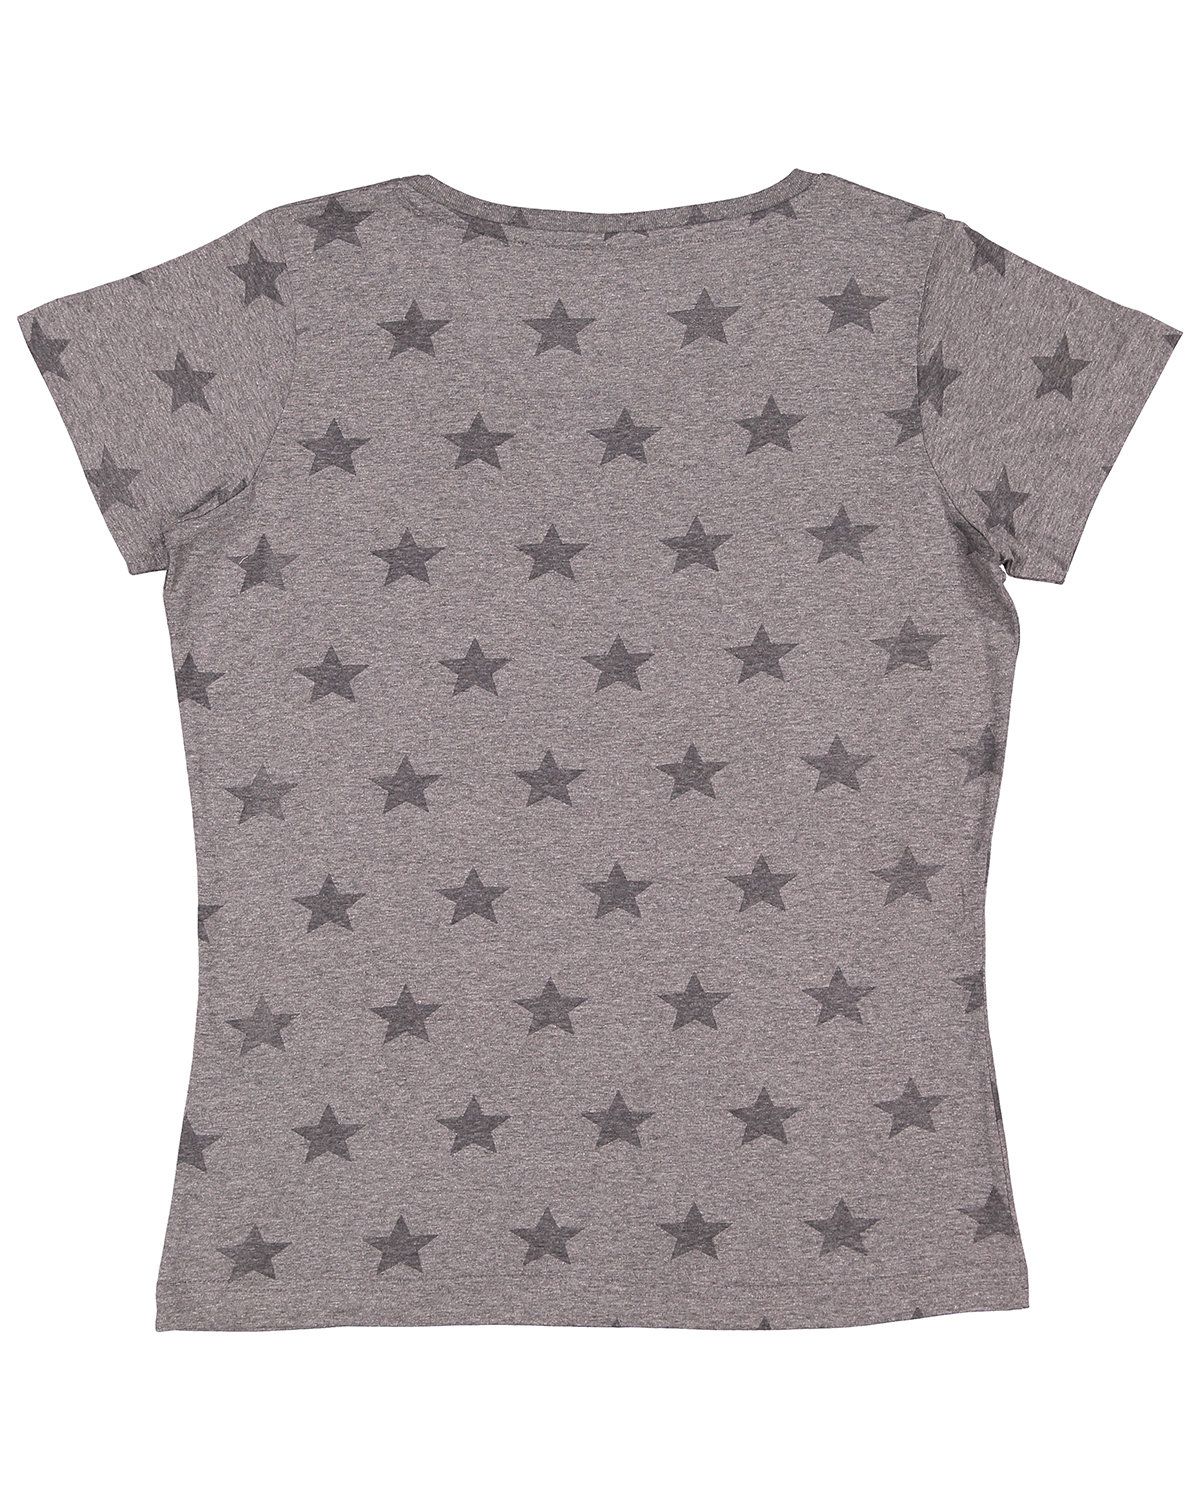 'Code Five 3629 Ladies Five Star T Shirt'